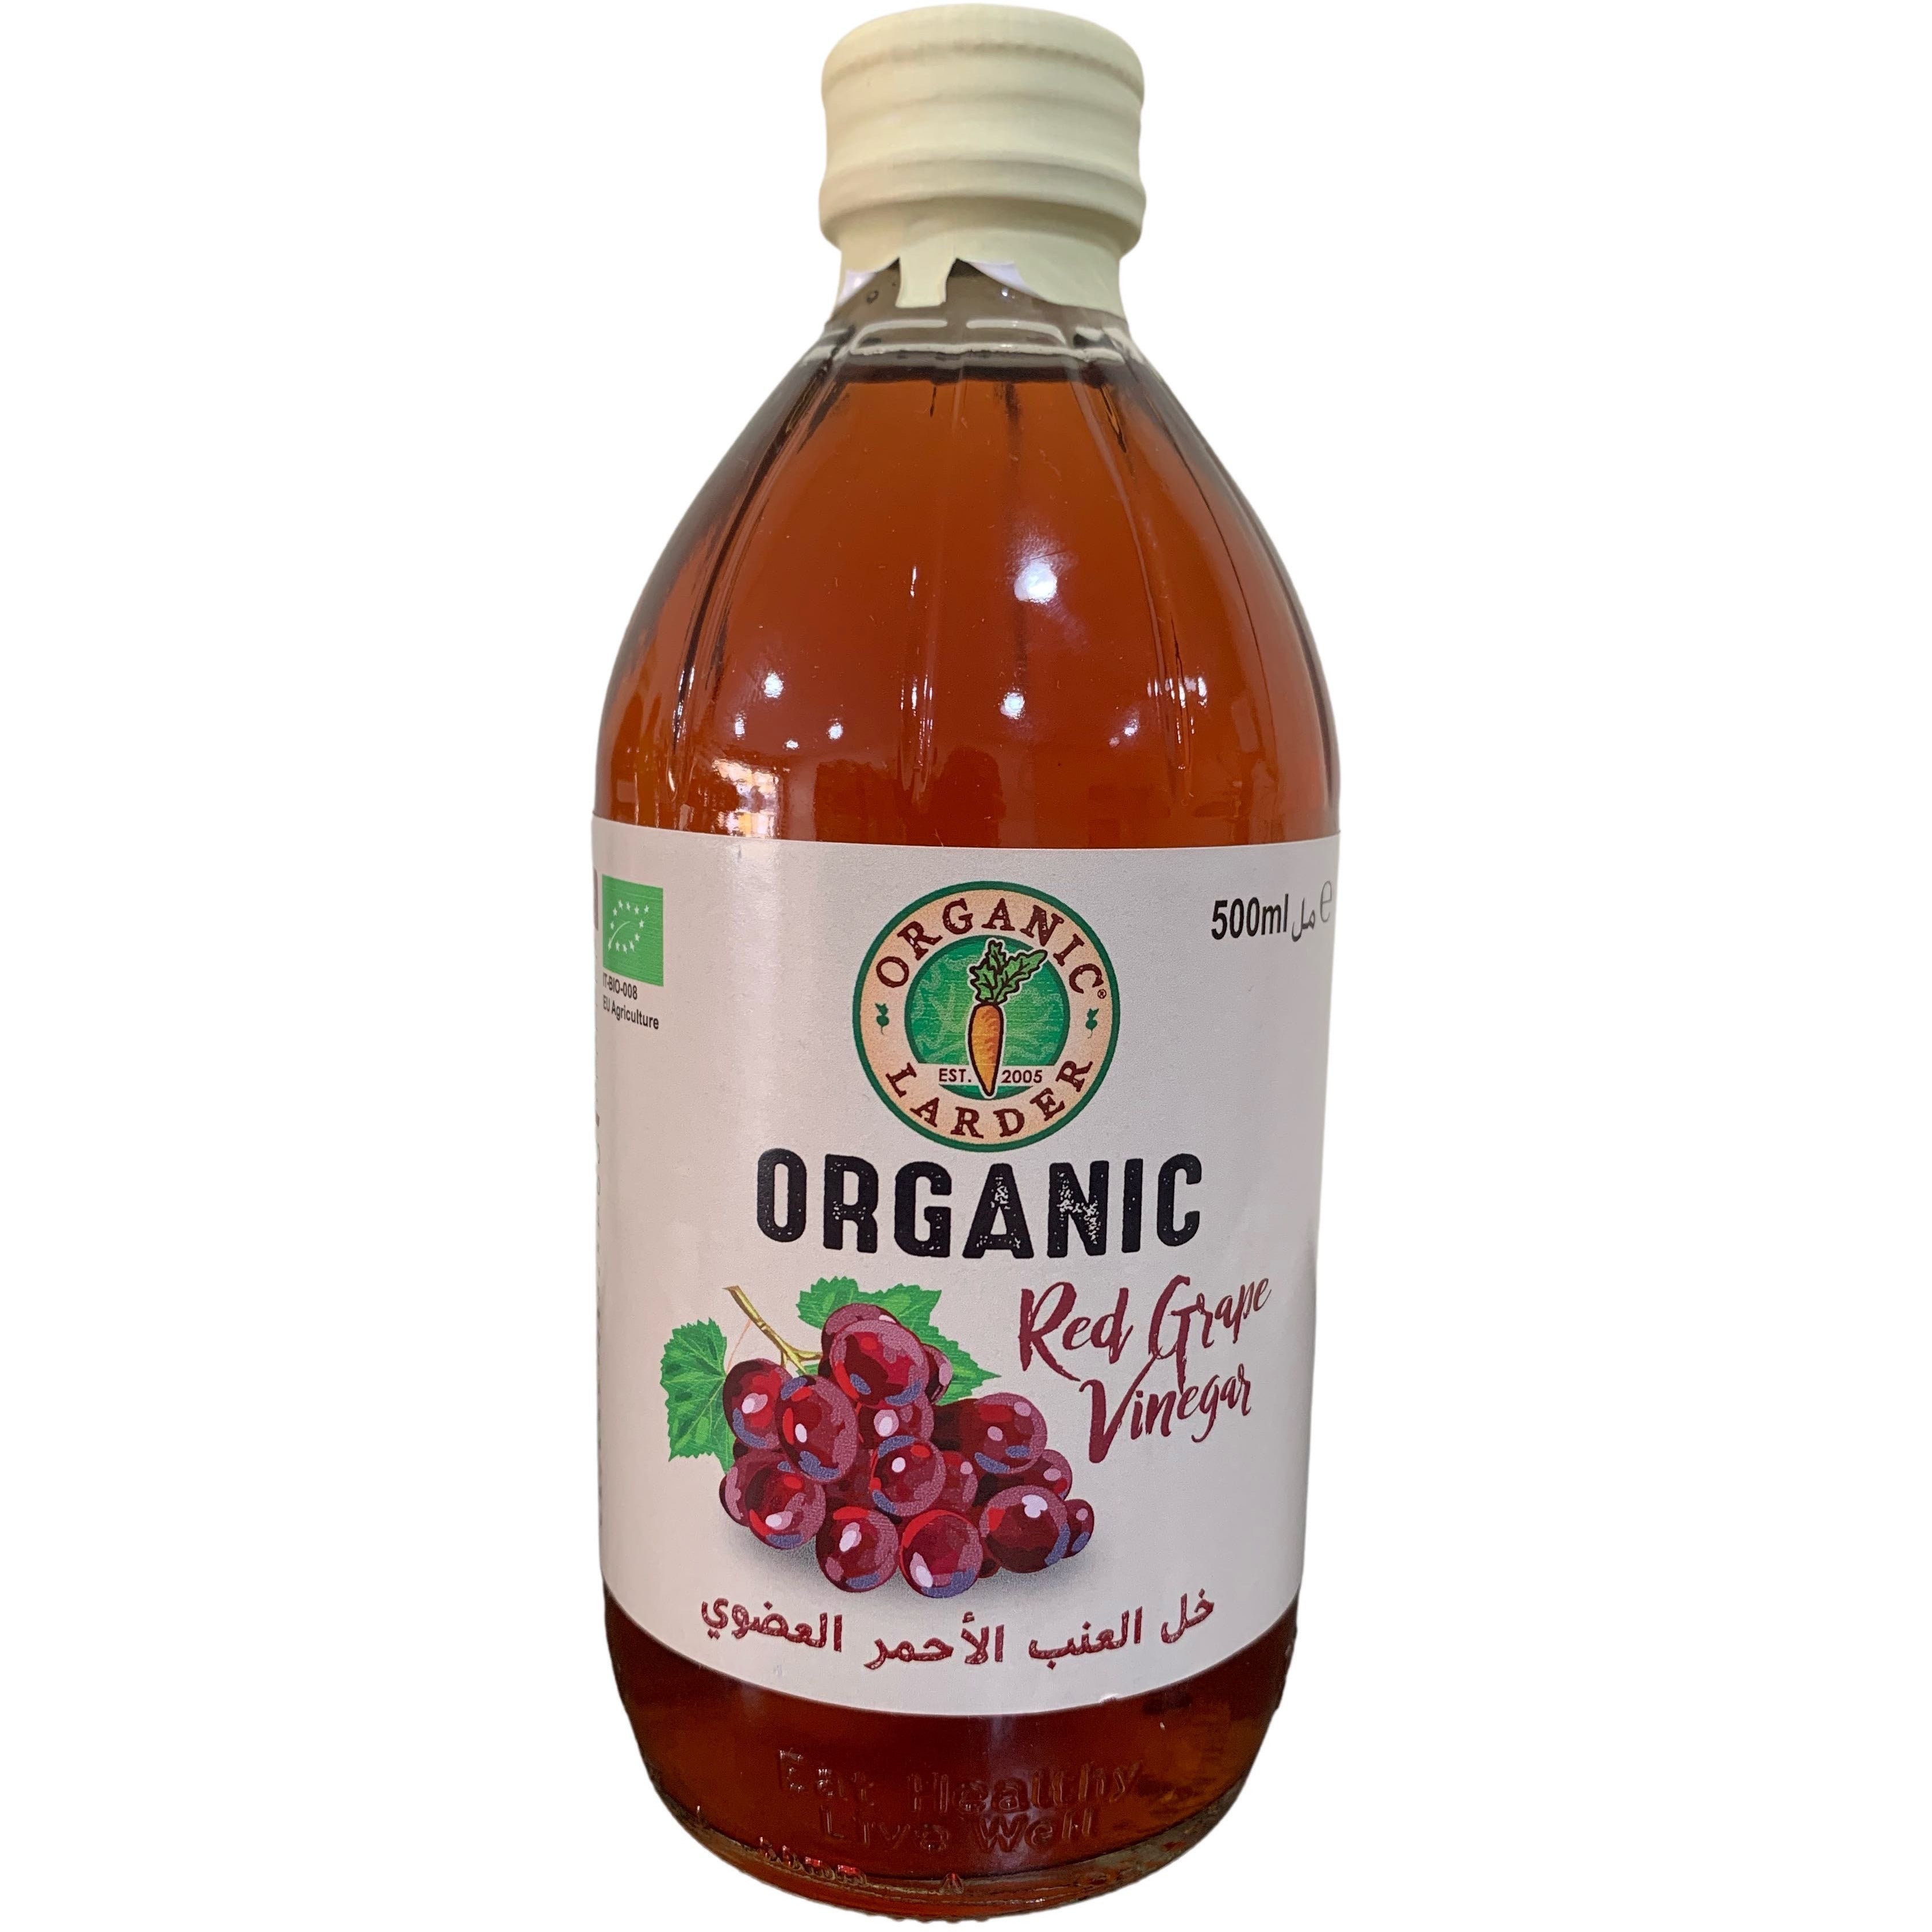 Organic Red Grape Vinegar.